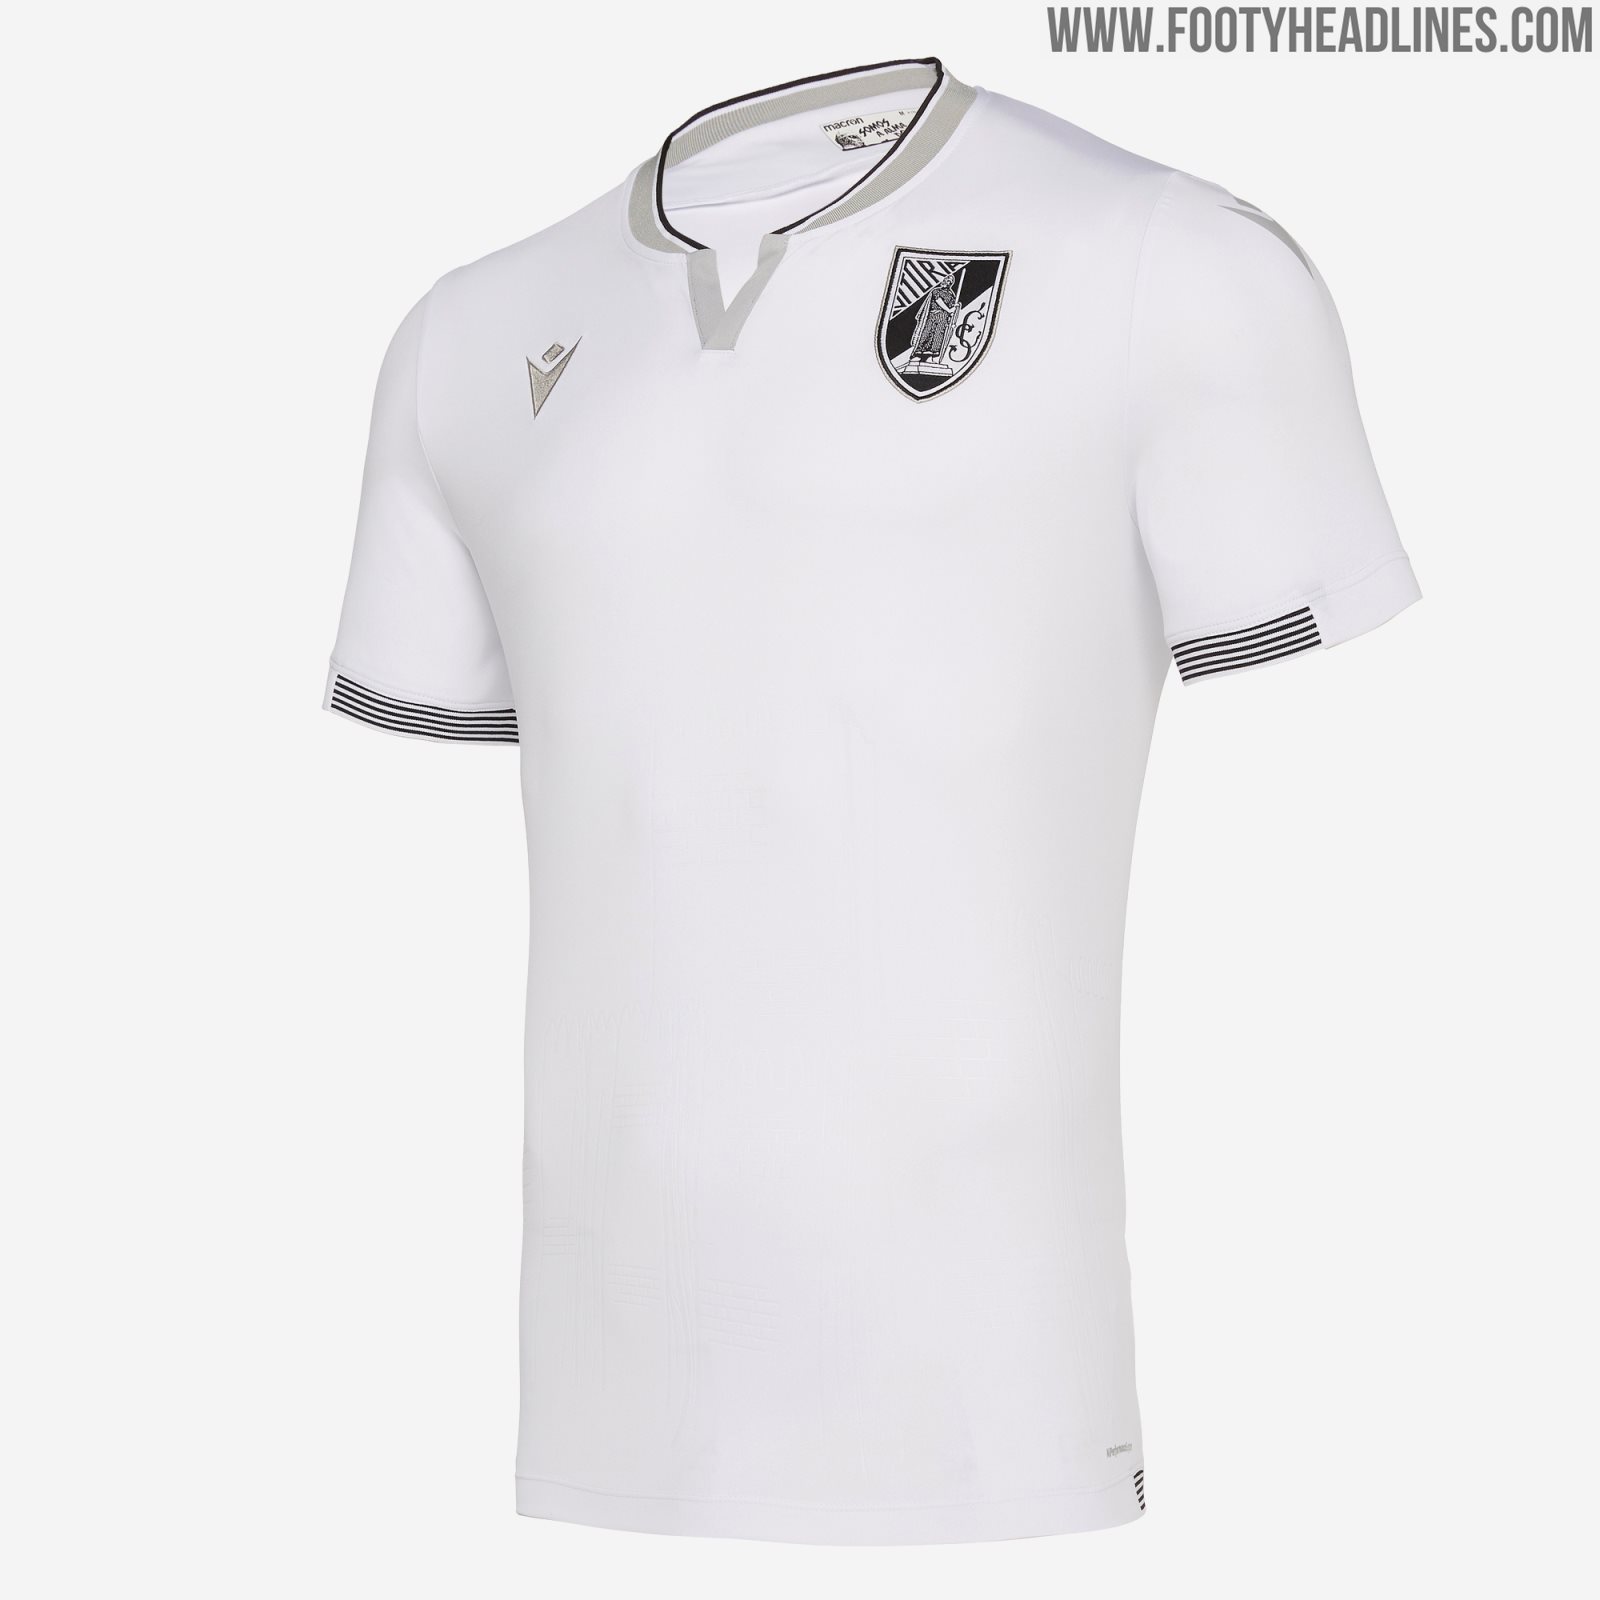 Vitória SC 19-20 Home and Away Kits Released - Footy Headlines